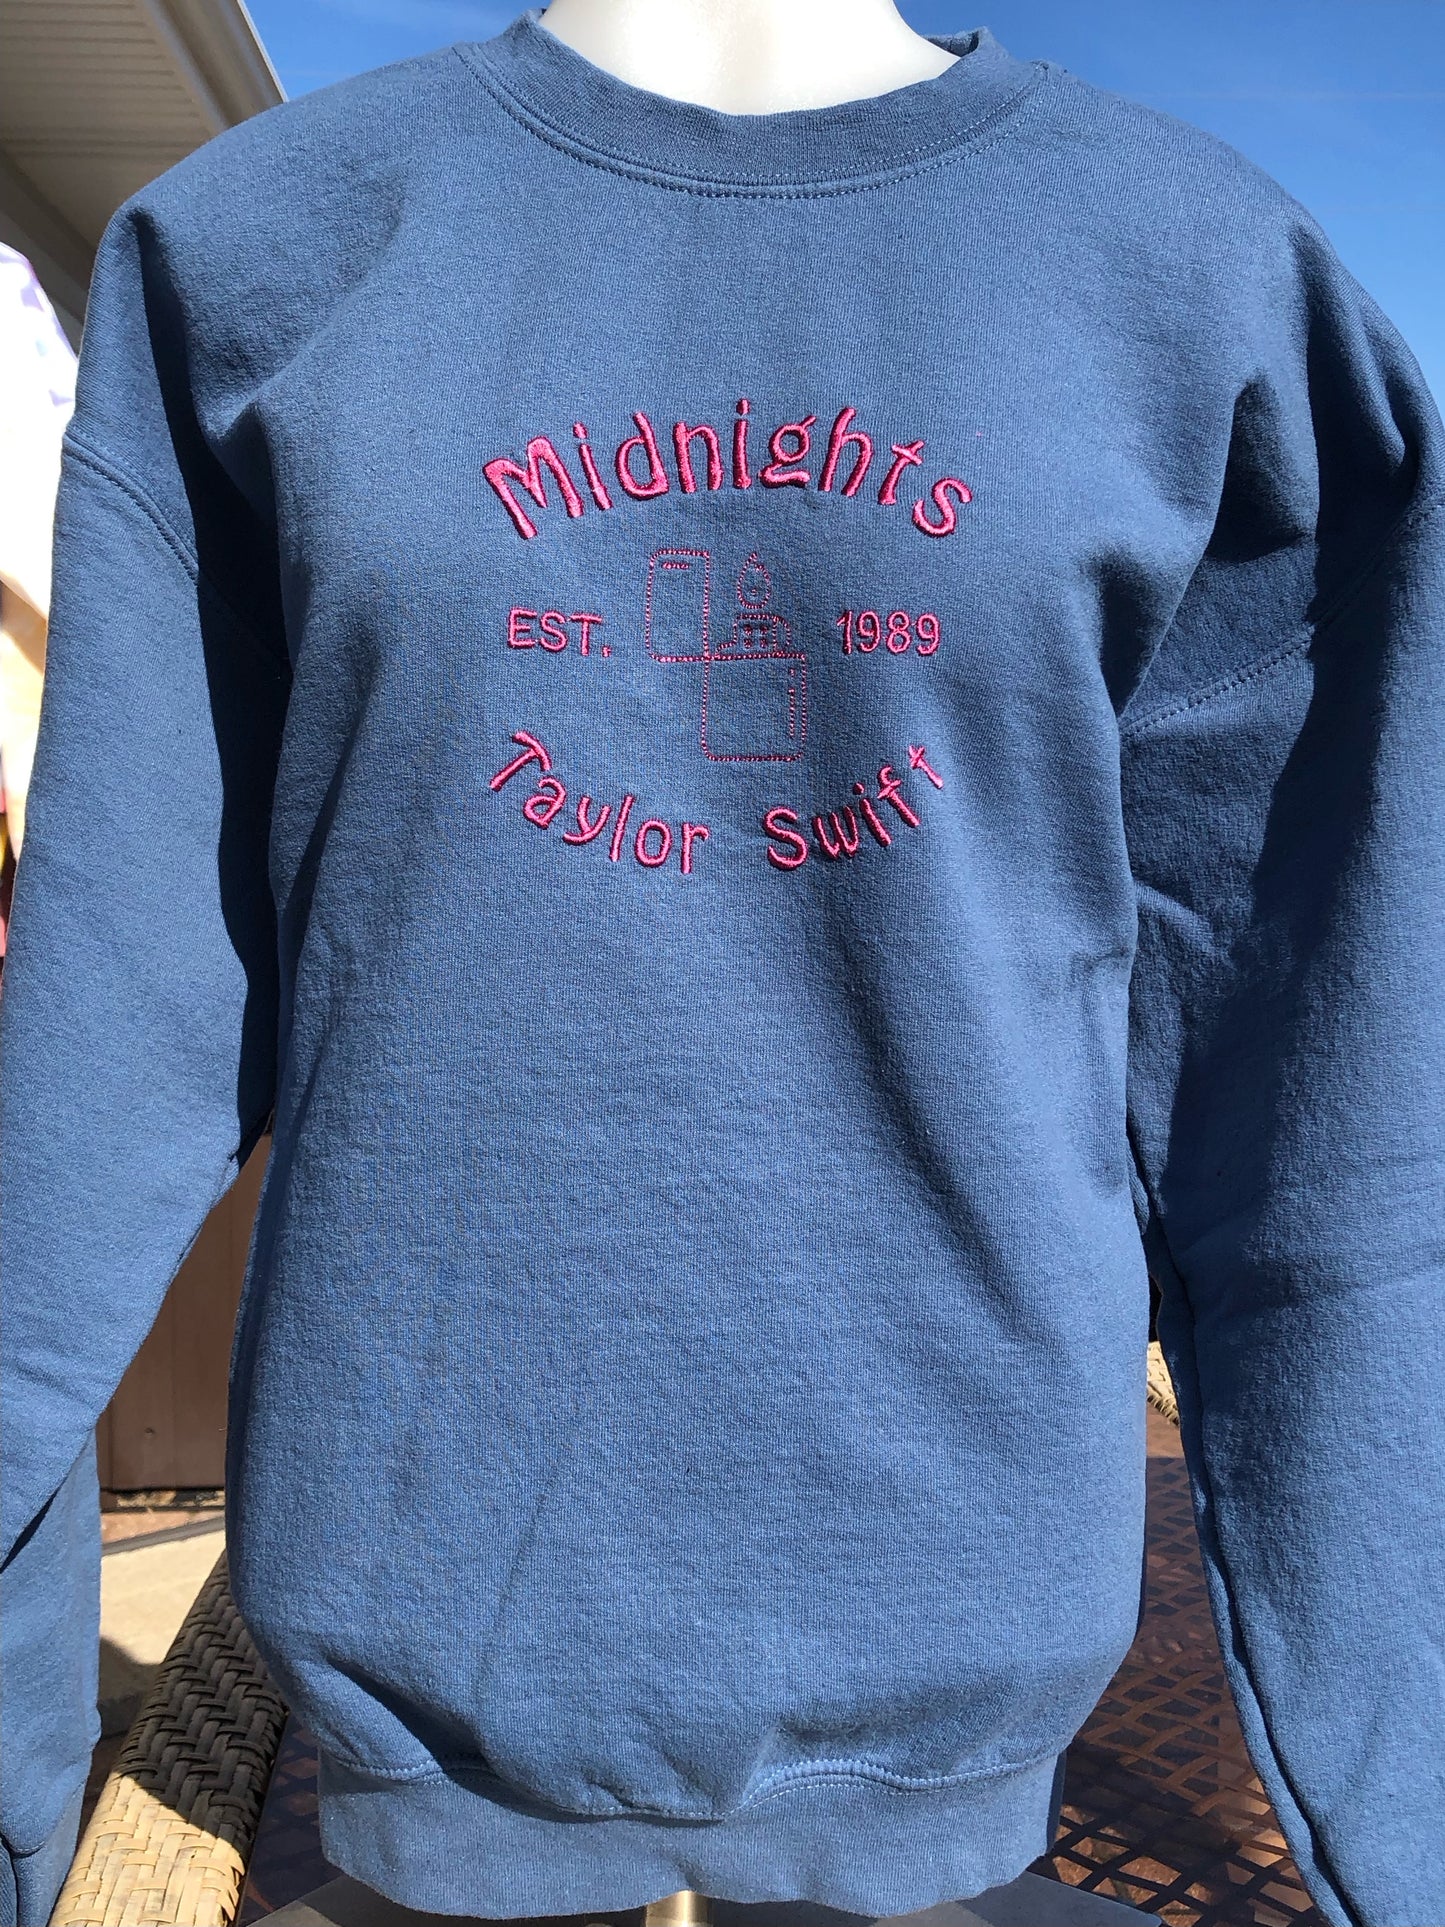 Midnights Embroidered Sweatshirt